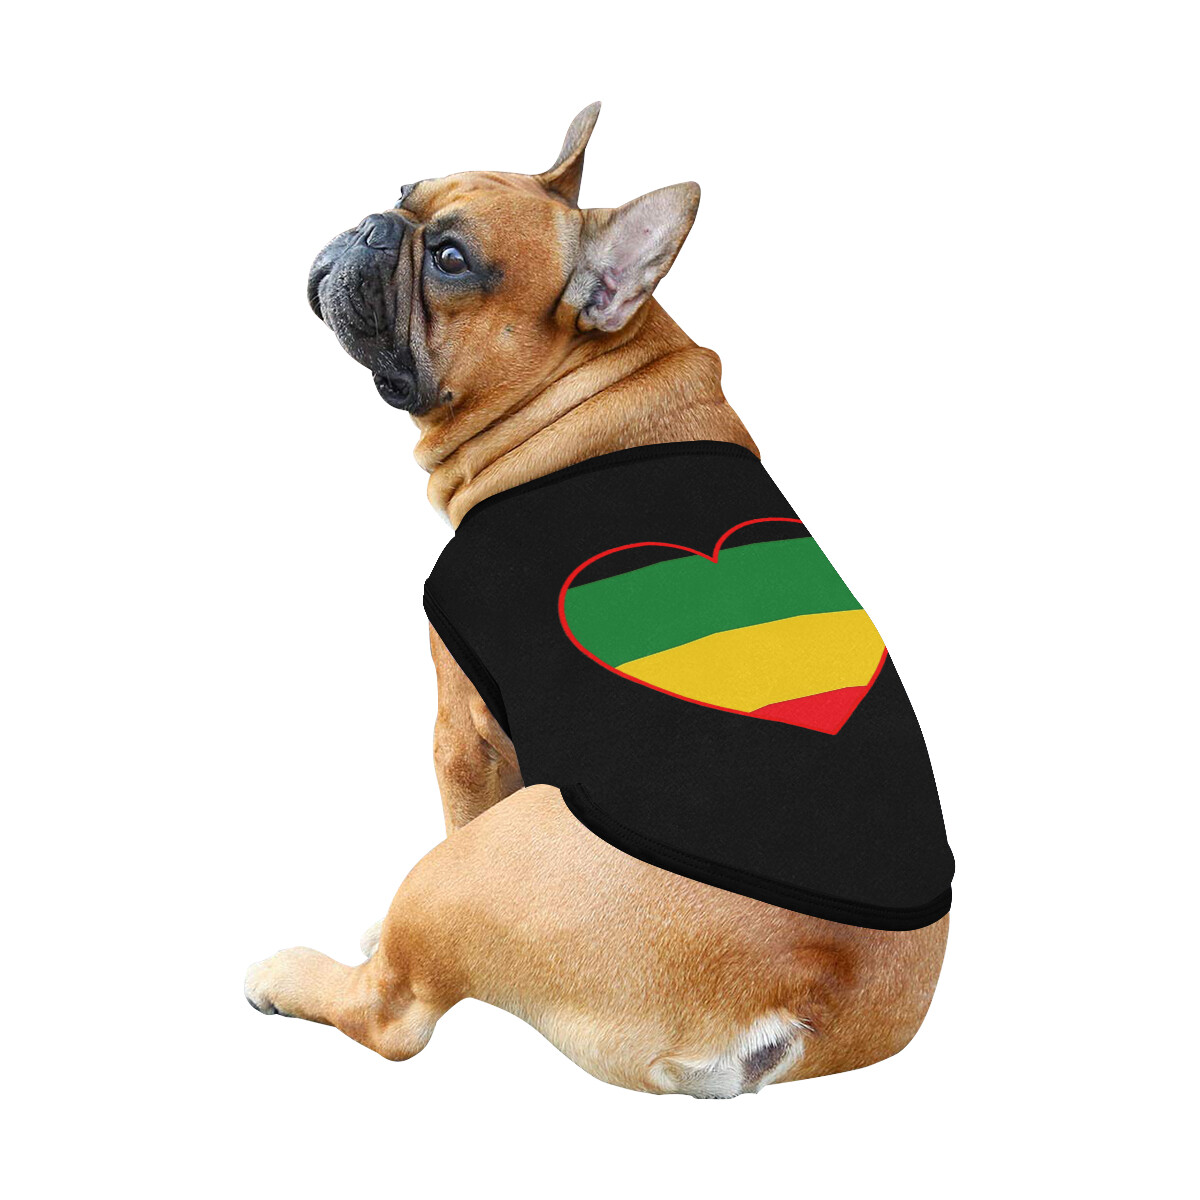 🐕 Rasta Dog Tank Top, Dog shirt, Dog clothes, Gifts, front back print, 7 sizes XS to 3XL, rasta flag, rasta dog shirt, rasta dog t-shirt, heart shape, black